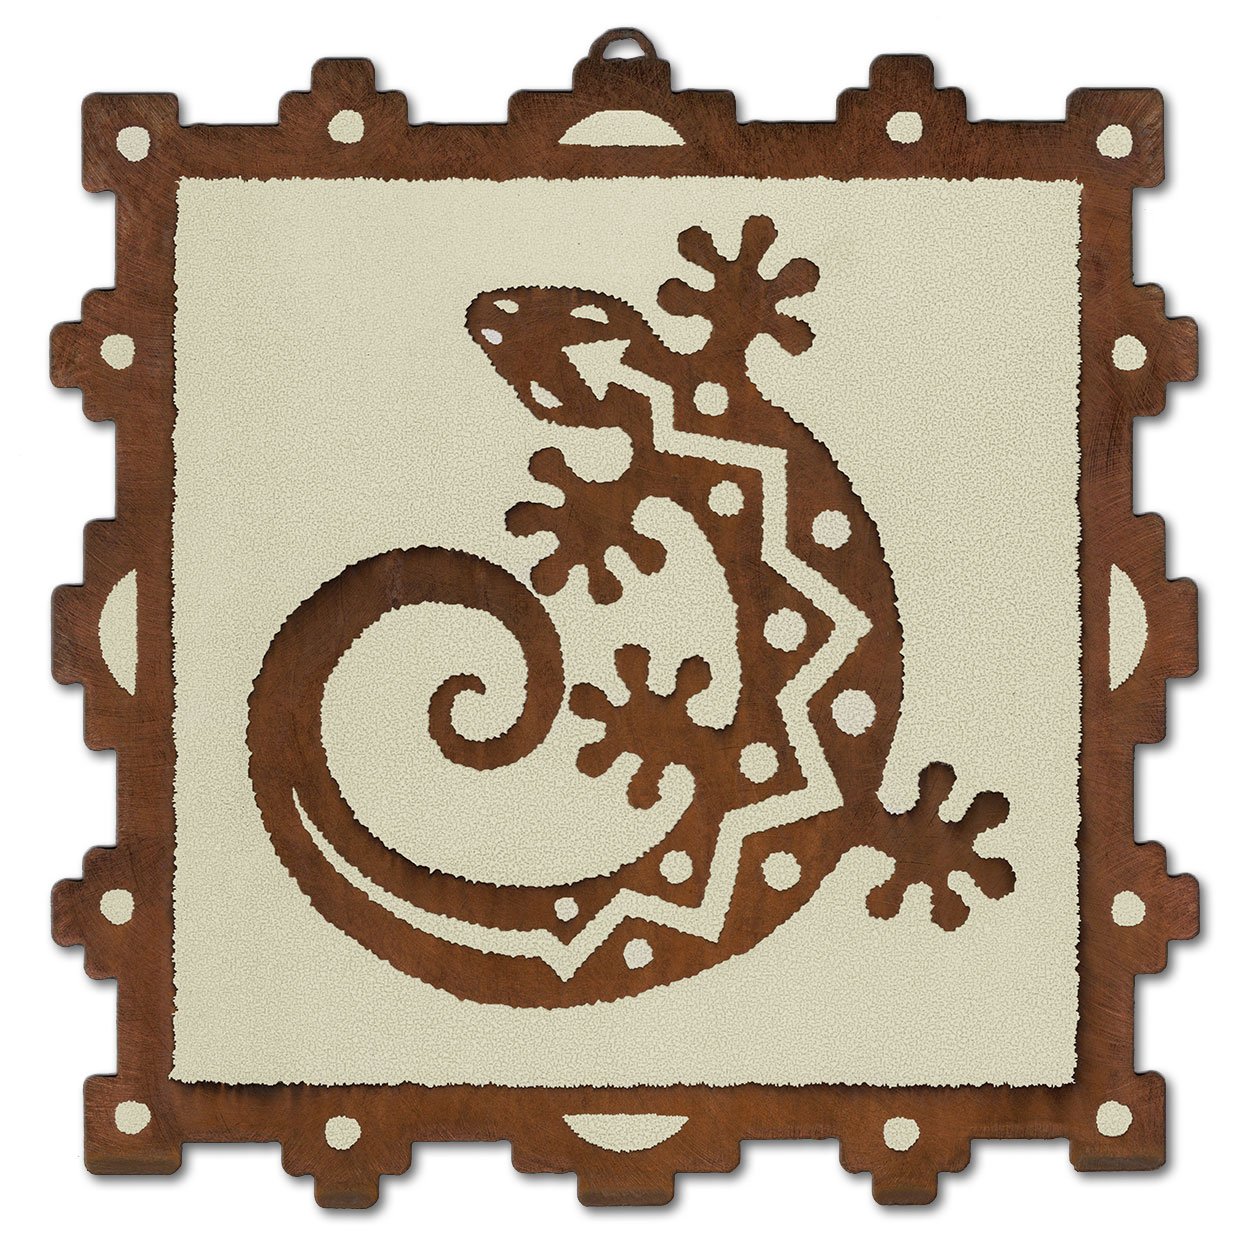 165883 - 10in Silk Screen Rustic Metal Wall Art - Southwest C Gecko